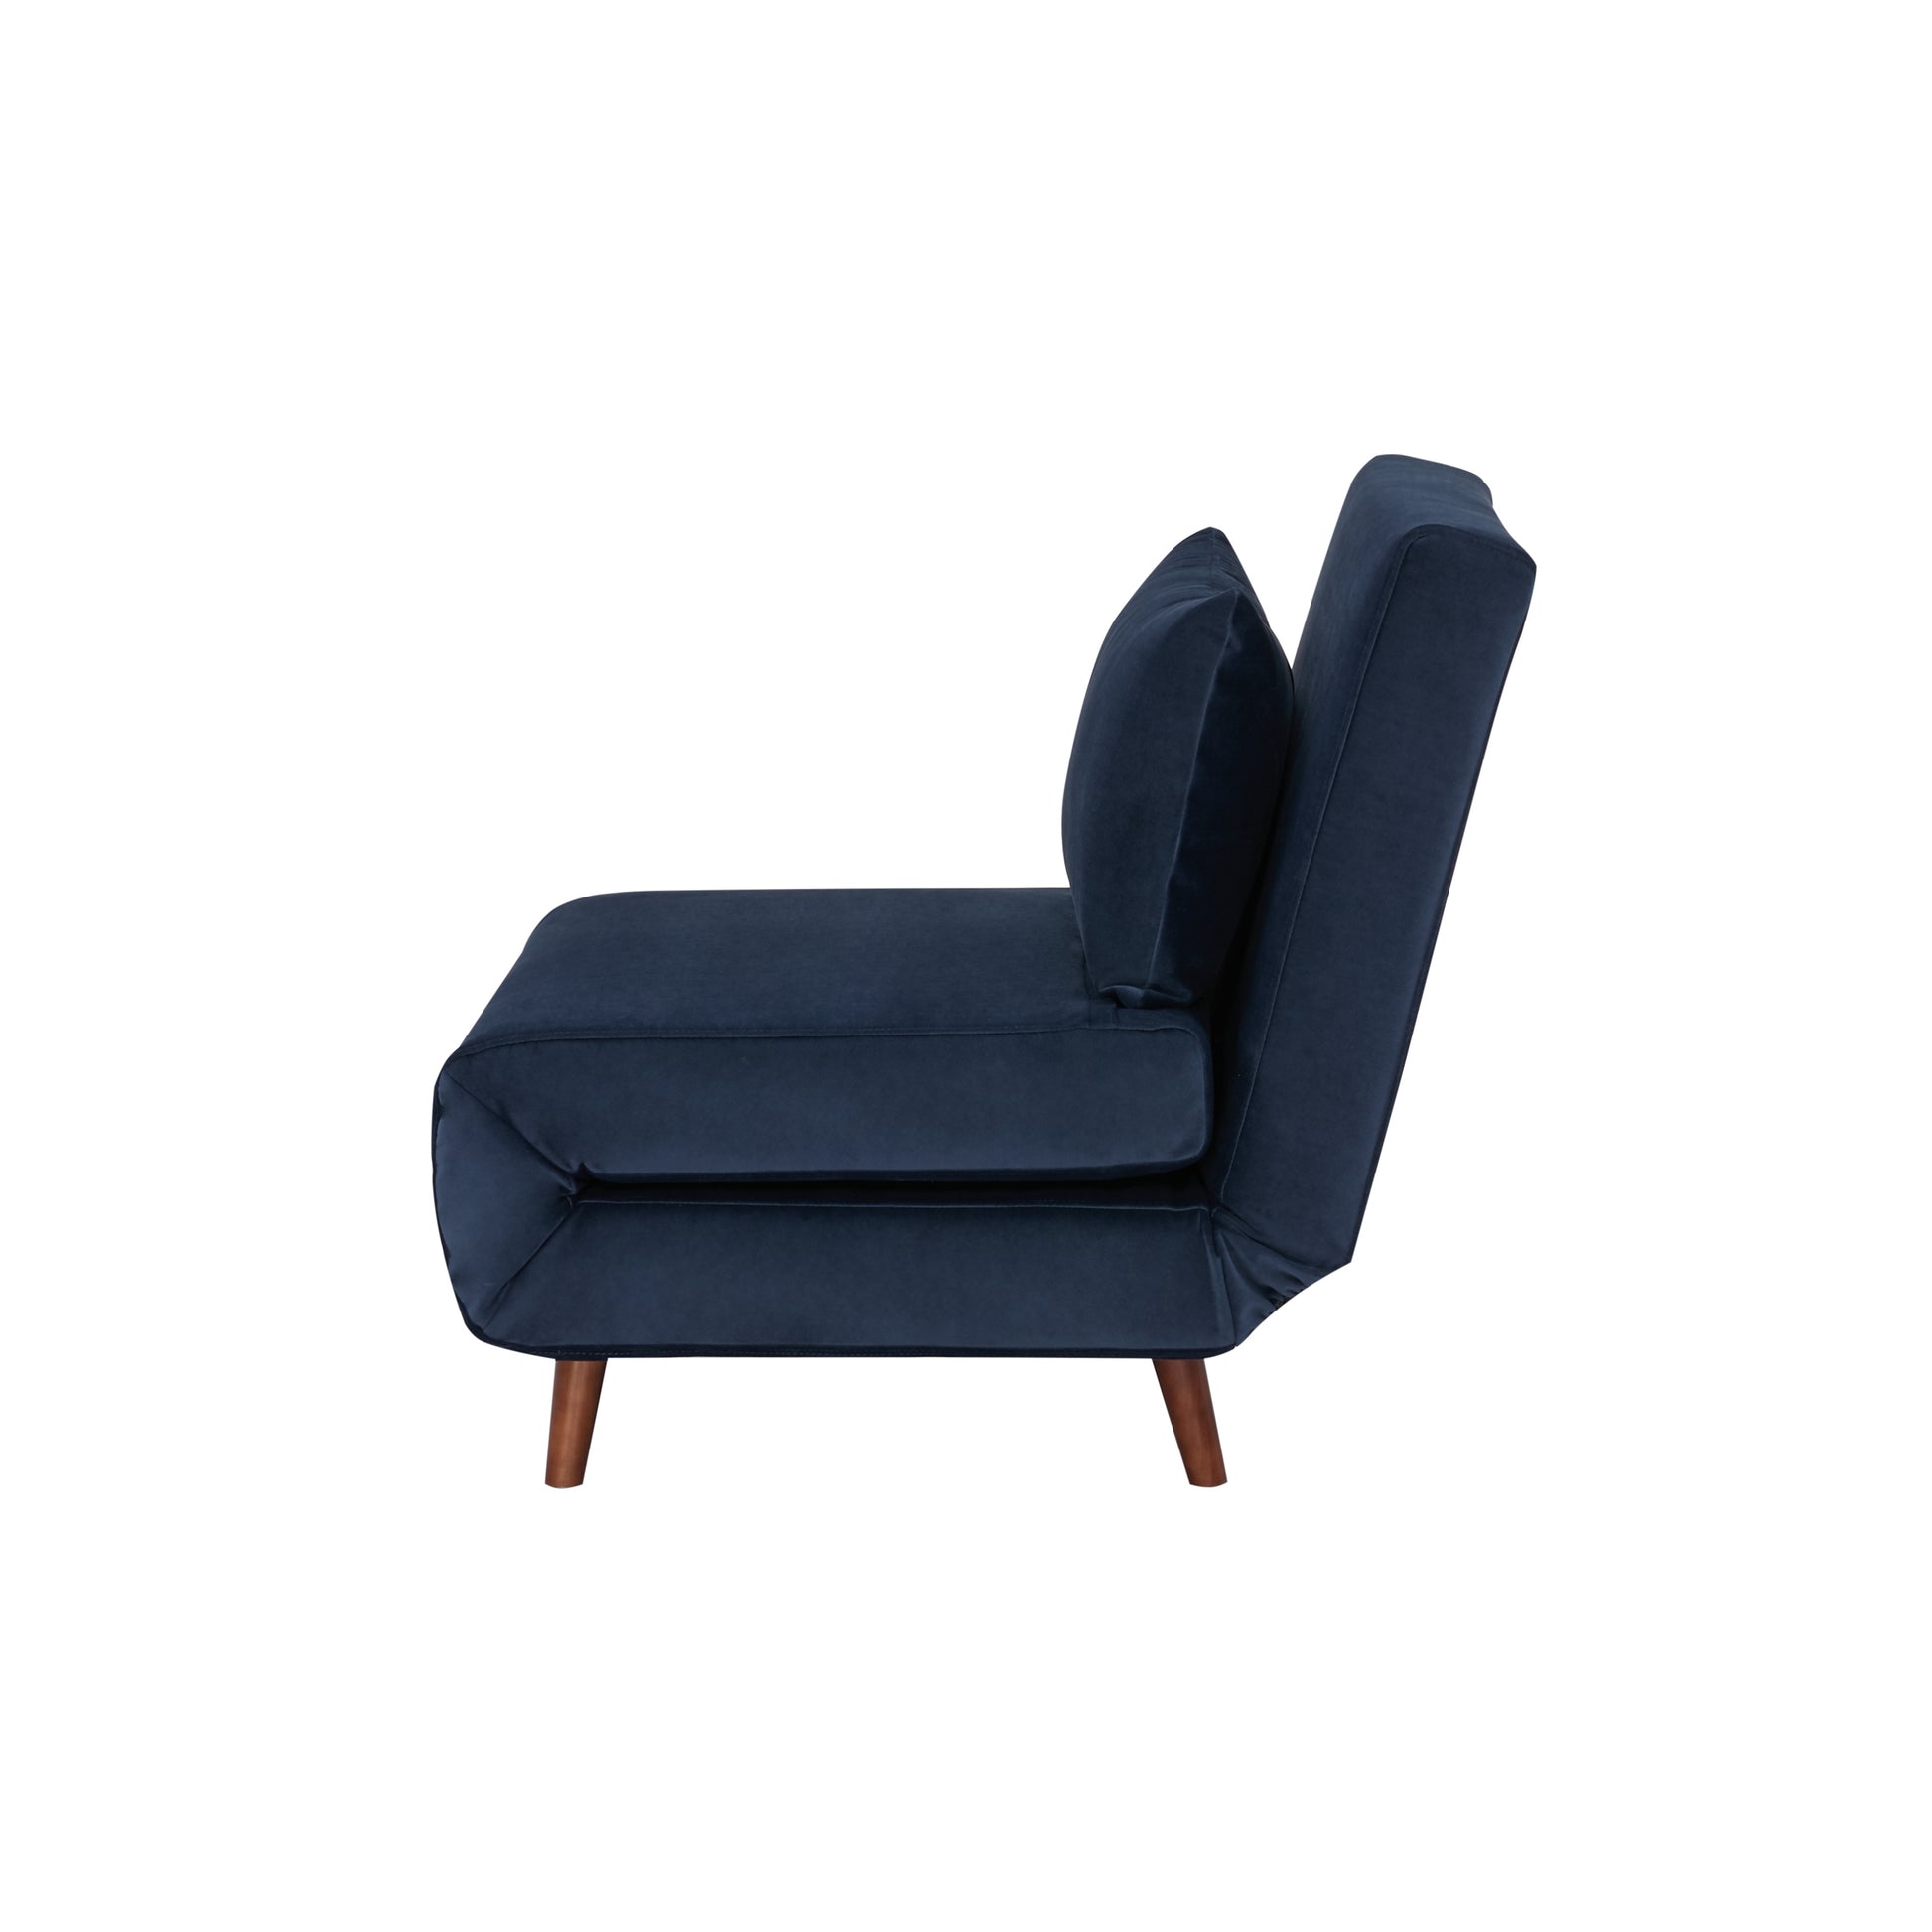 Modern and Comfortable Tustin Velvet Convertible Sleeper Chair - Order Now!  – Artdeco Home